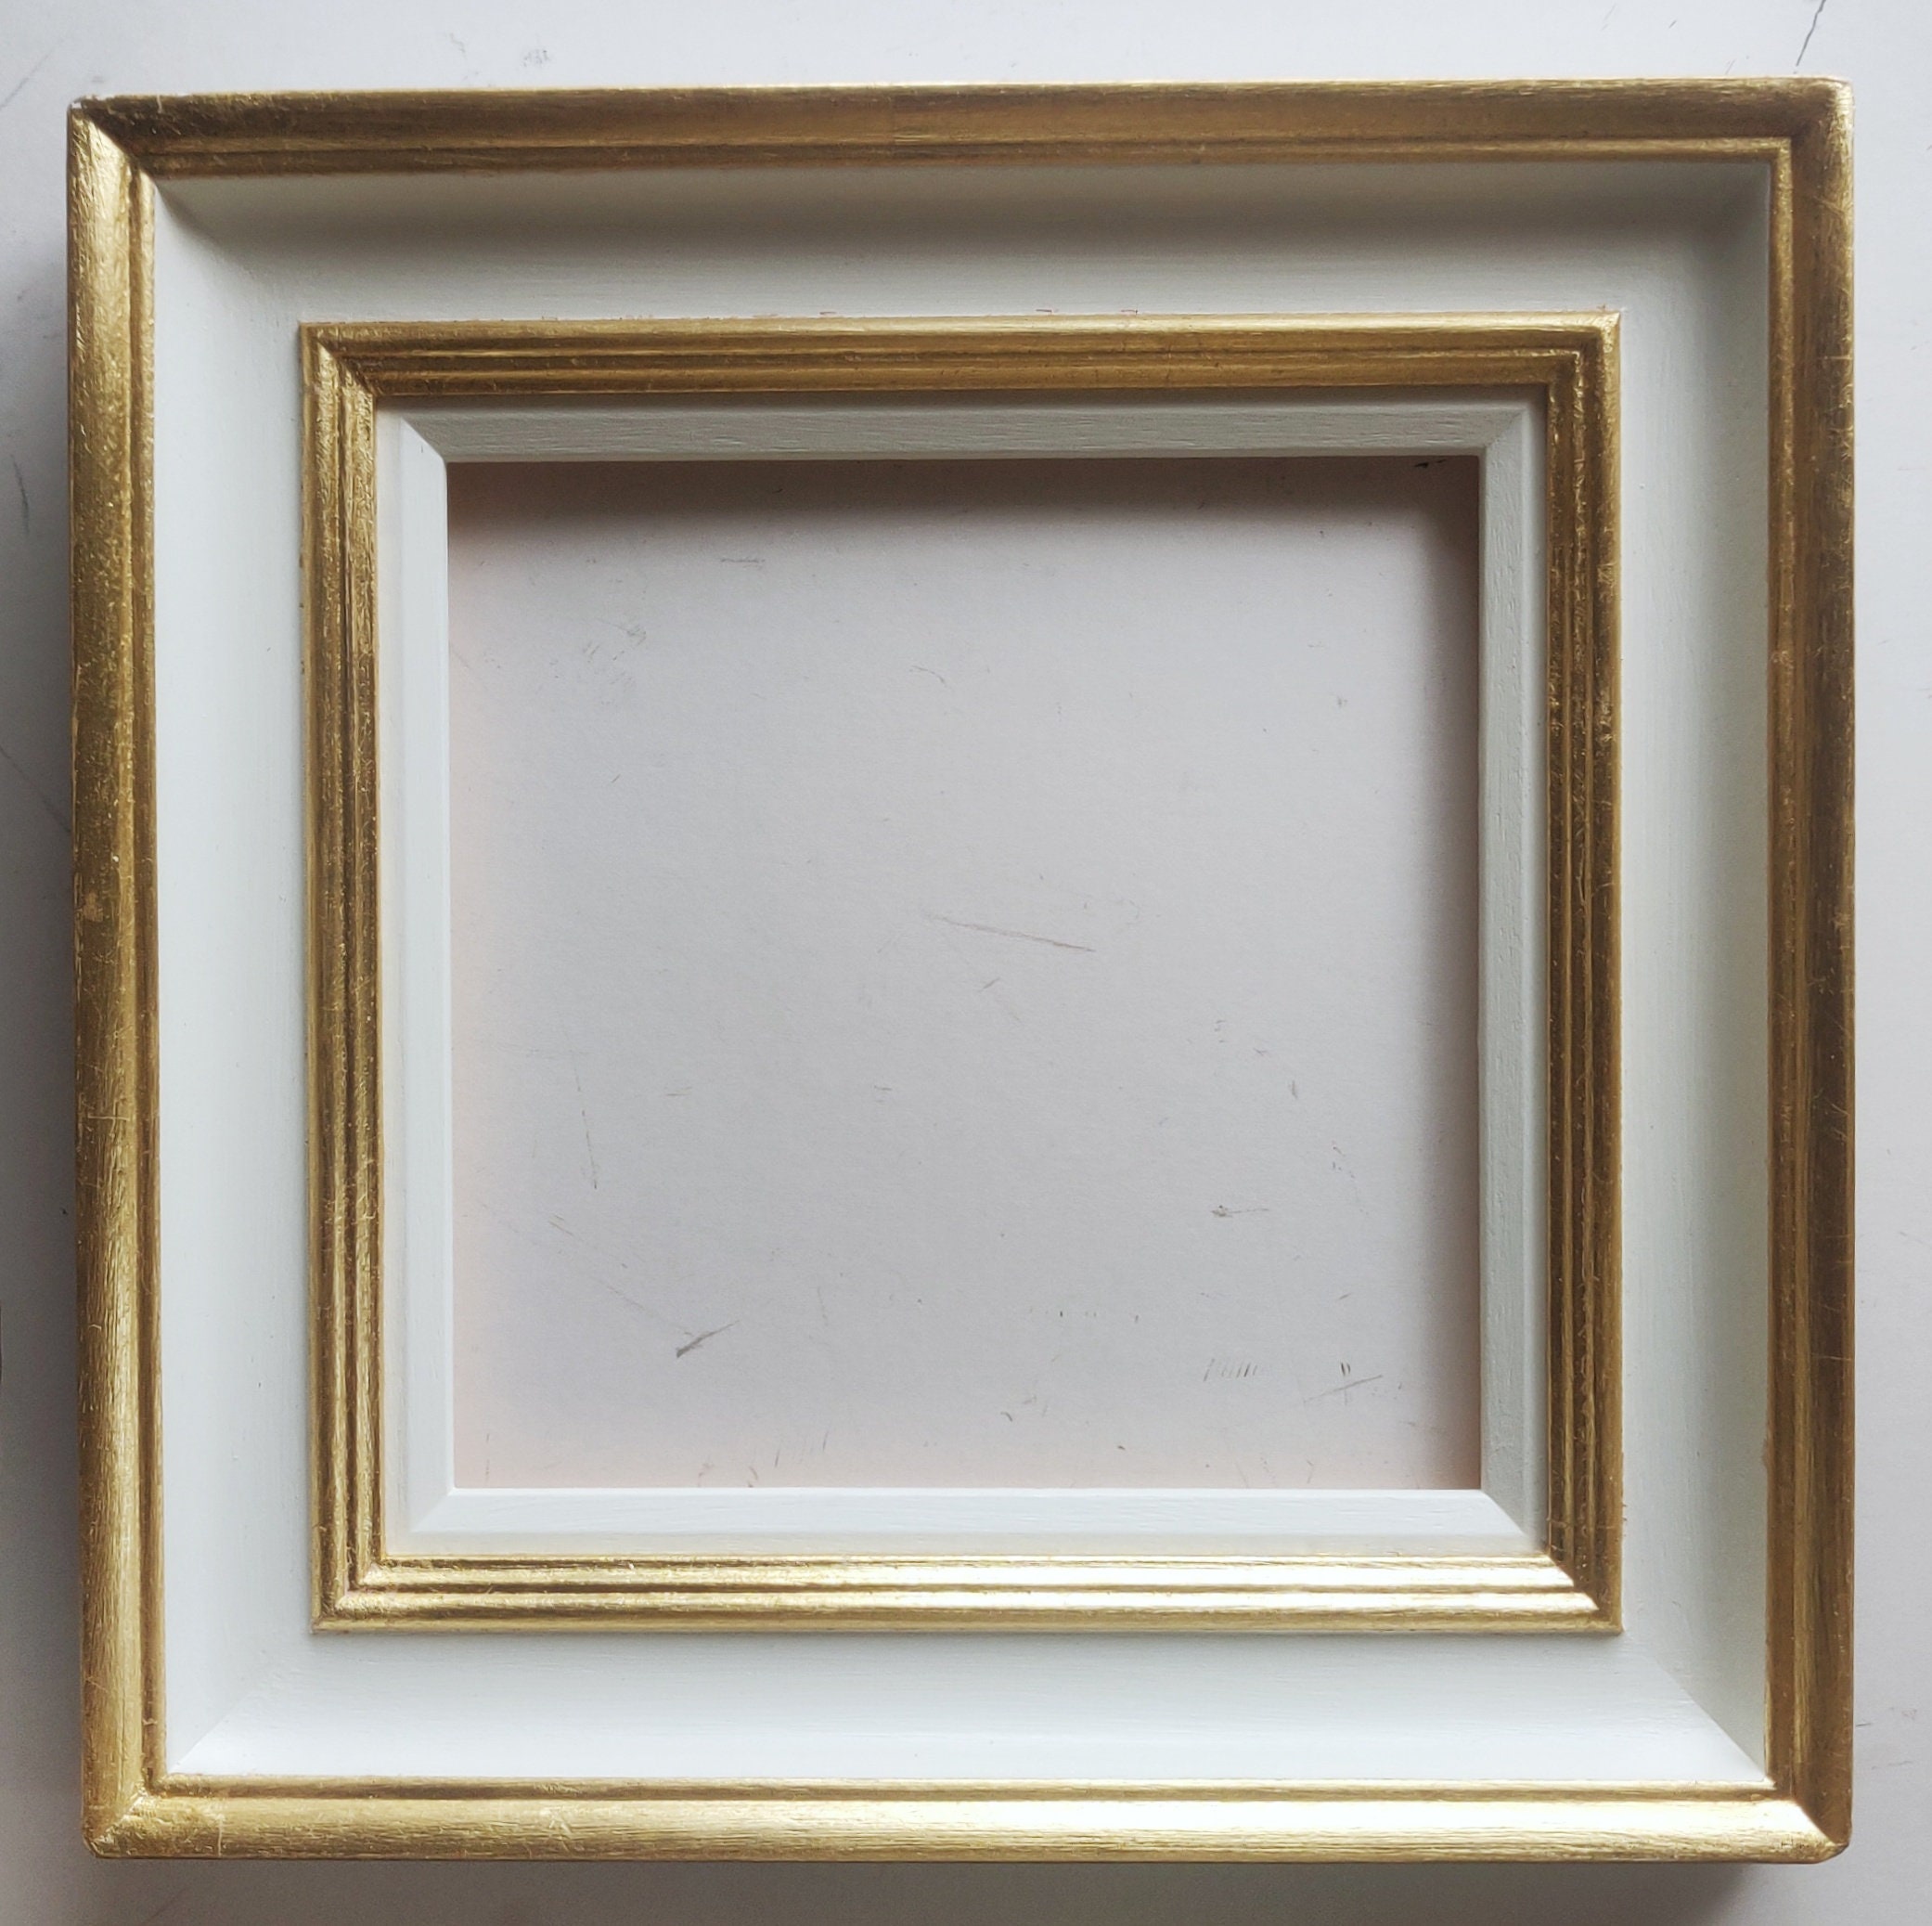 Gold Ornate 8x8 Picture Frame 8x8 Frame 8x8 Photo Frame Square